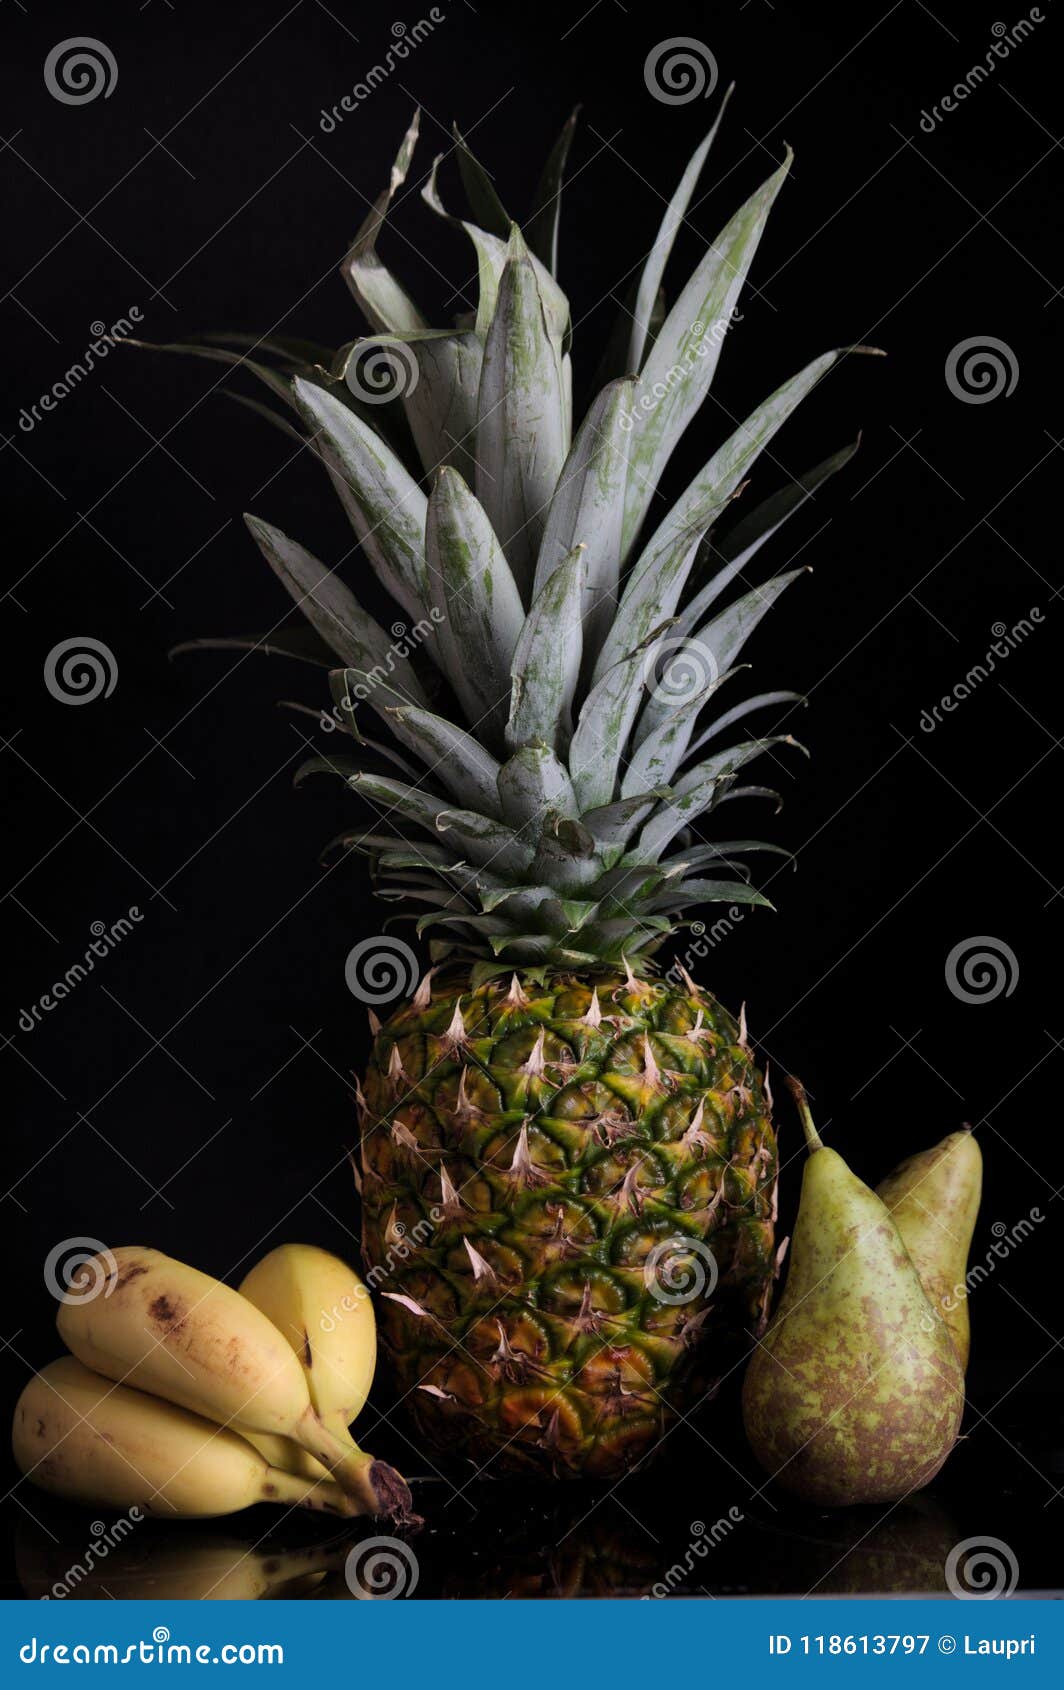 pineapple, bananas and pears